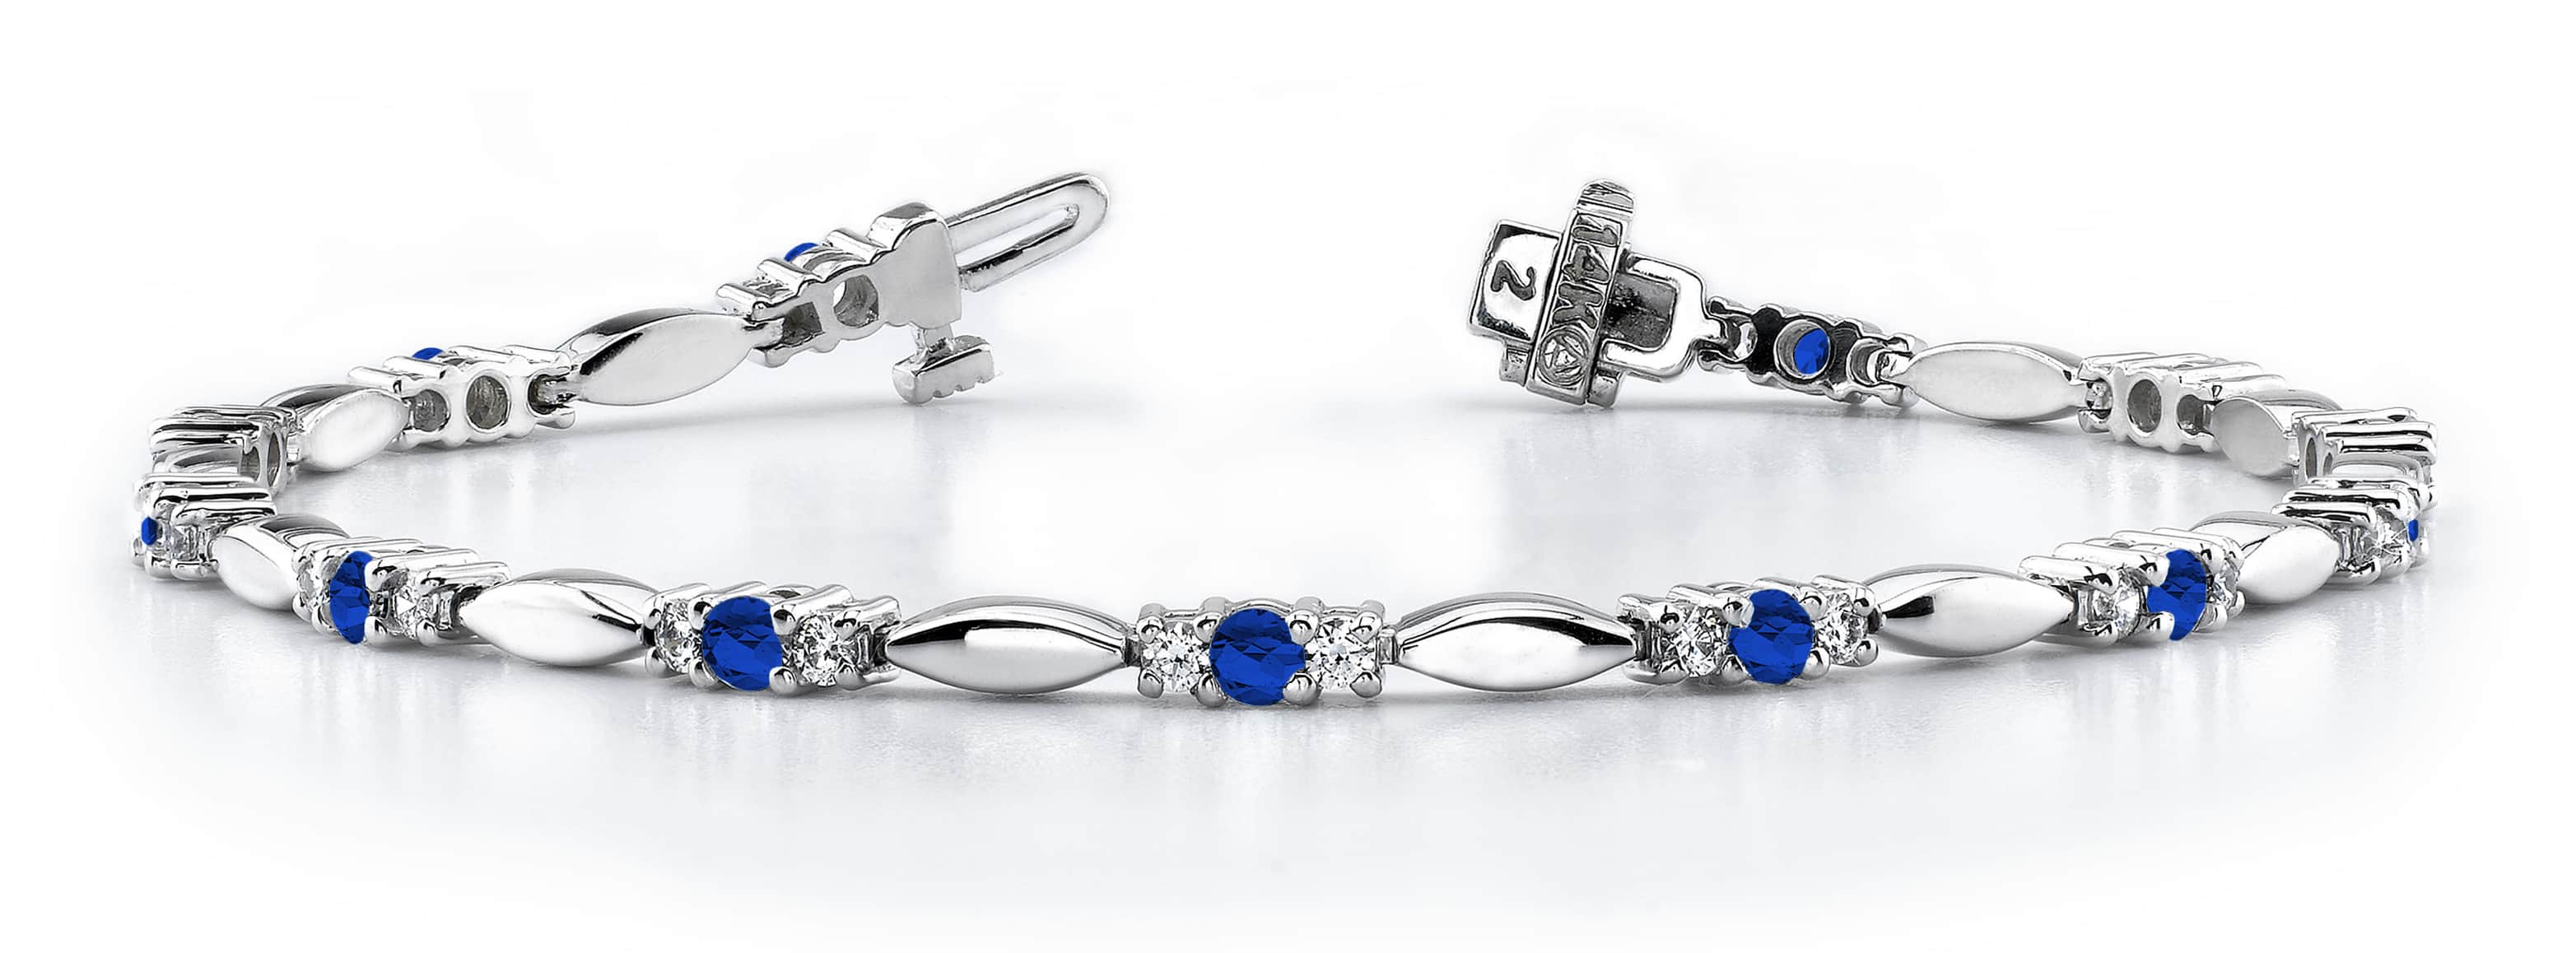 Elliptical Link Gemstone And Diamond Bracelet Available In Platinum Or Gold